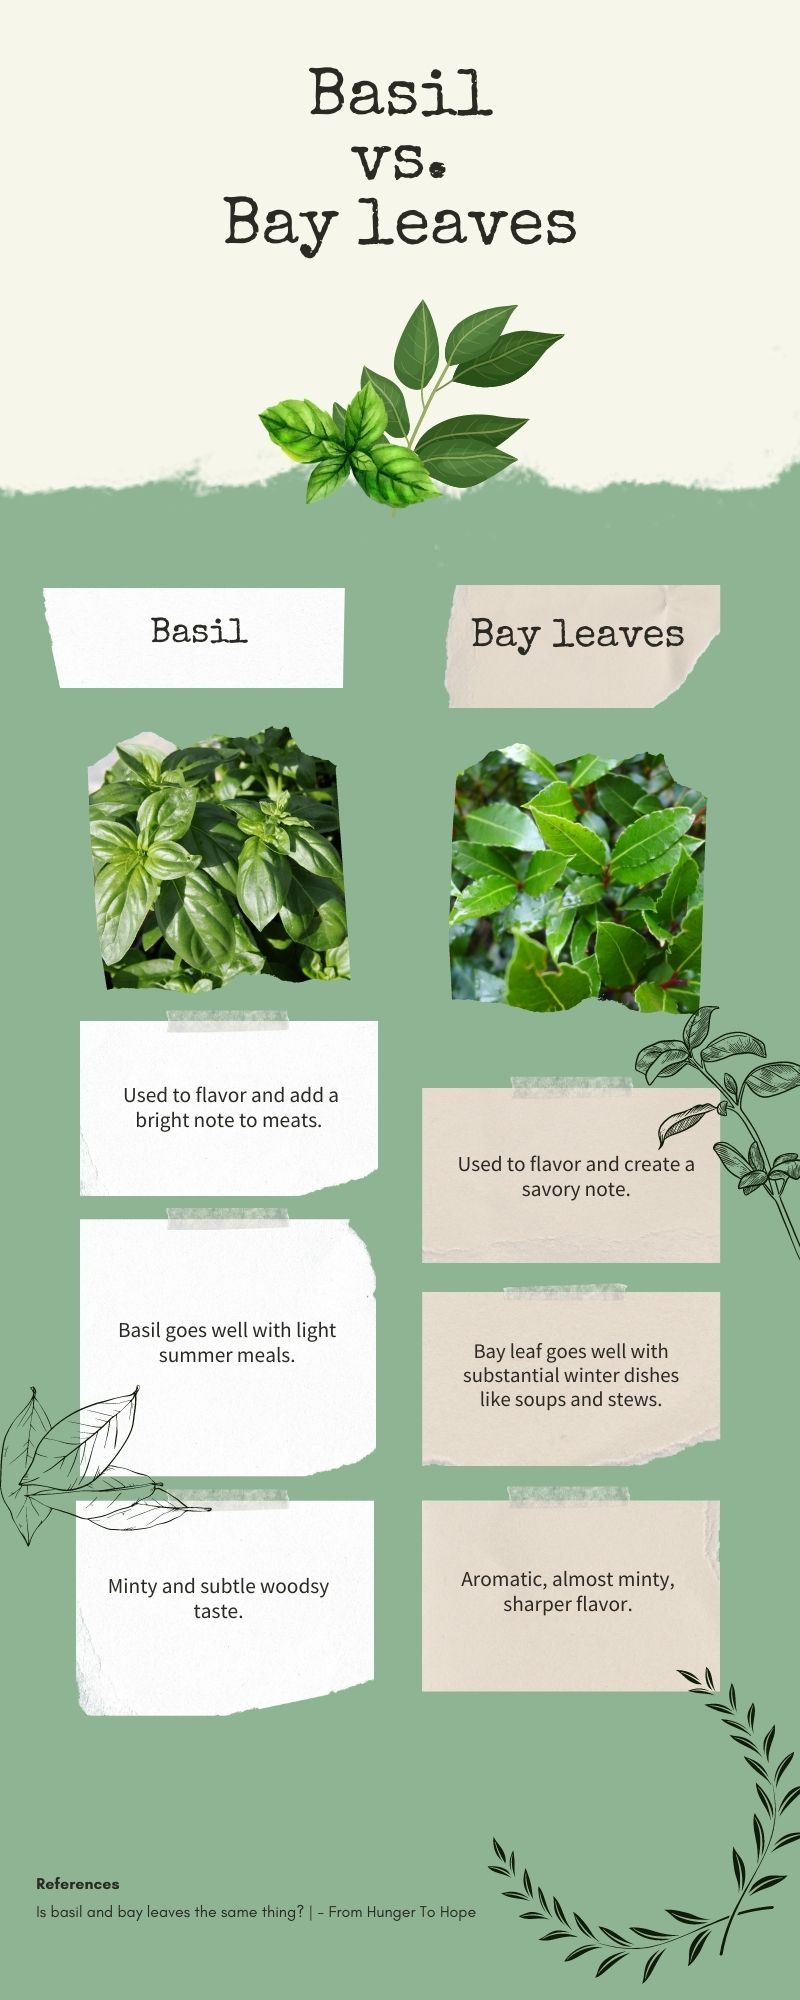 Basil vs. Bay leaves